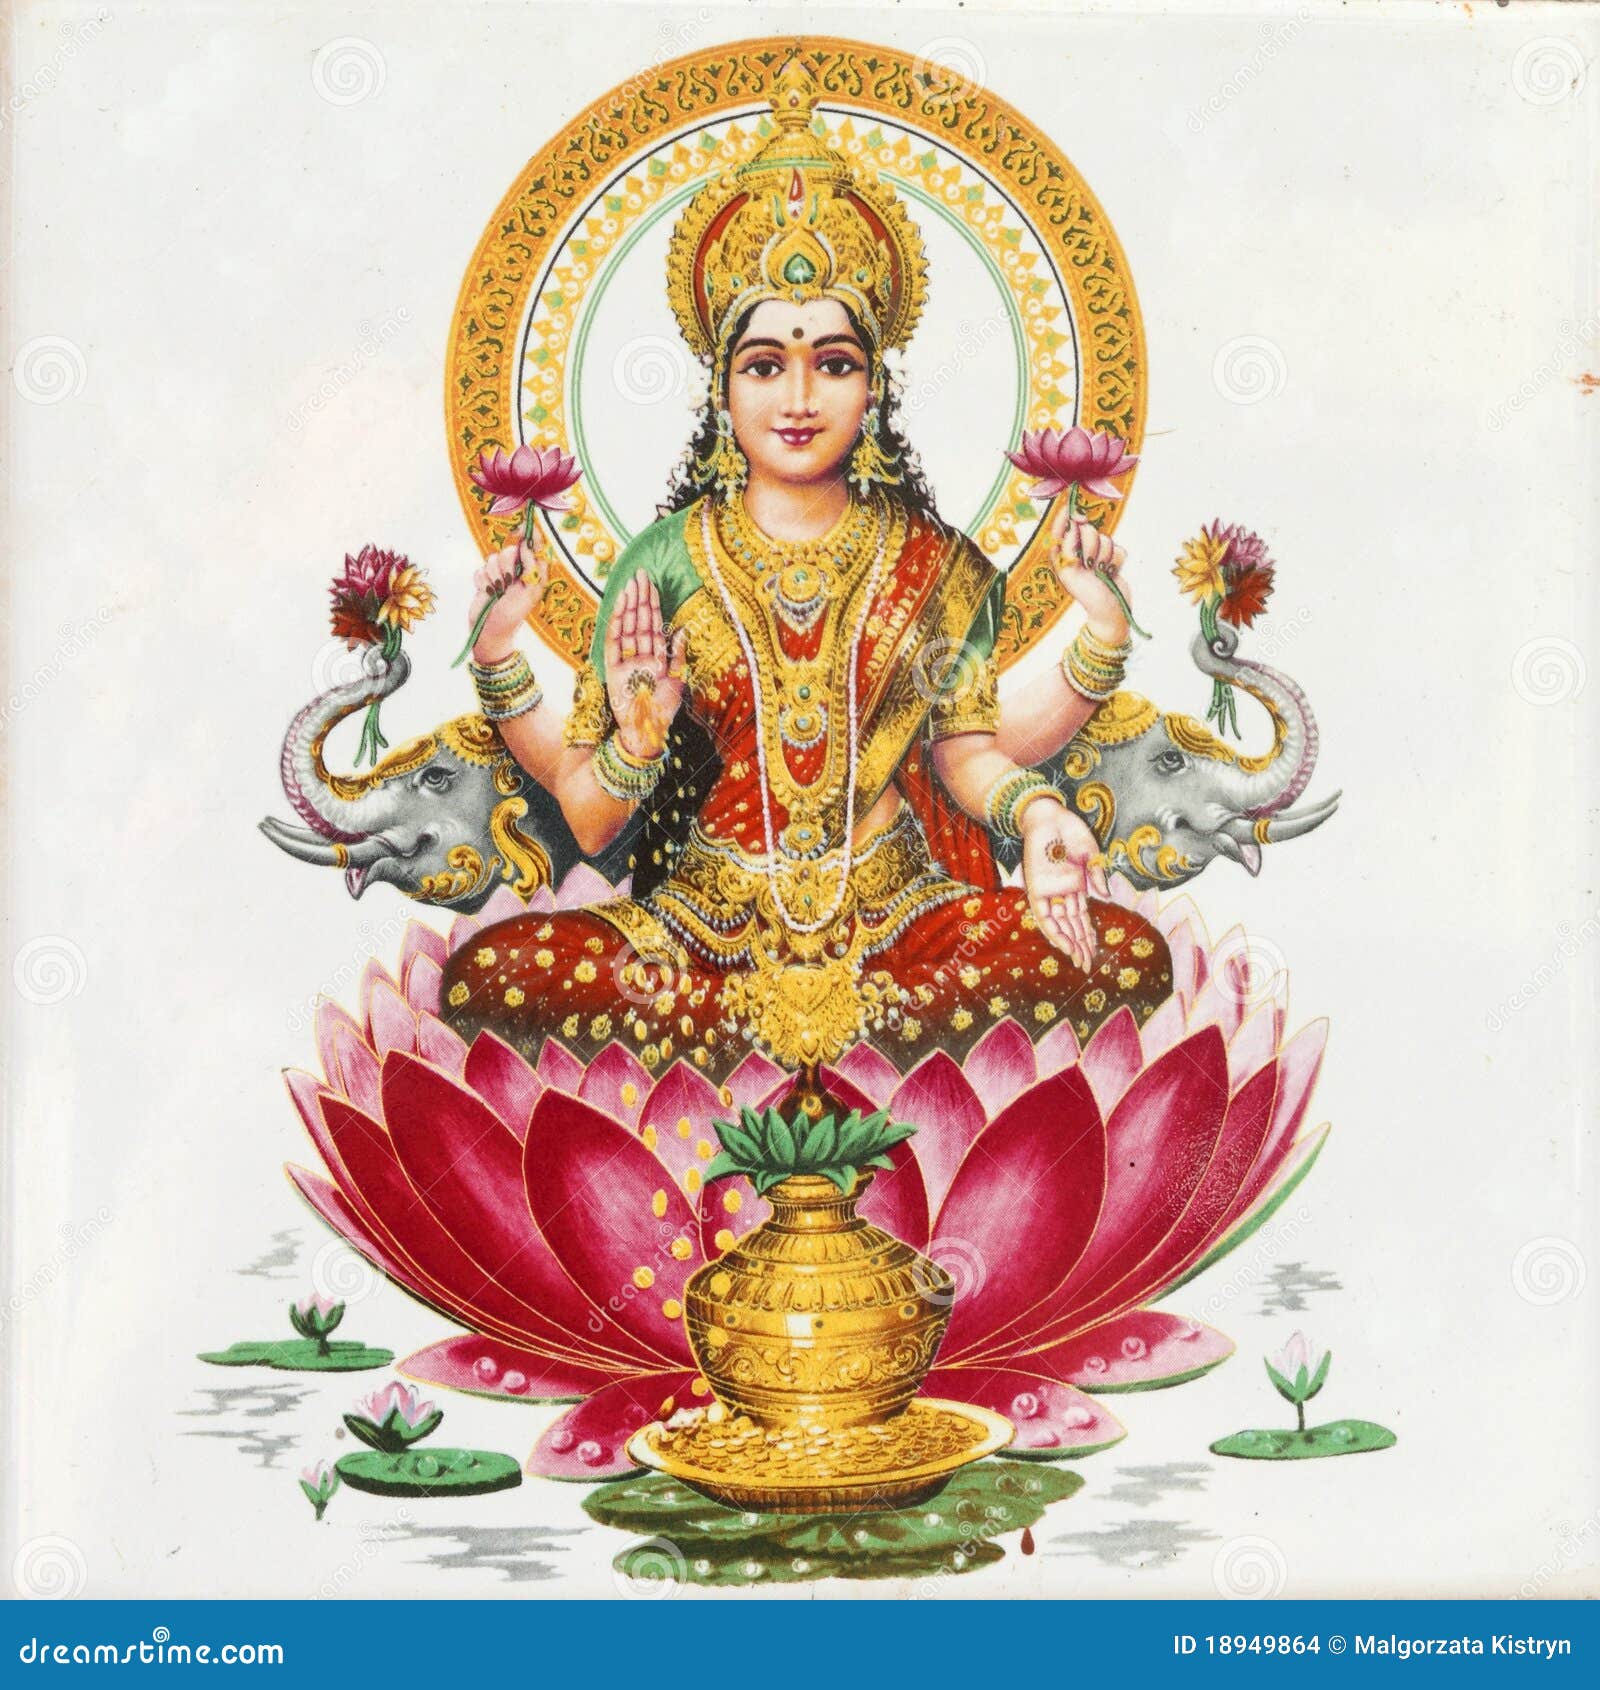 Lakshmi goddess stock photo. Image of orient, culture - 18949864